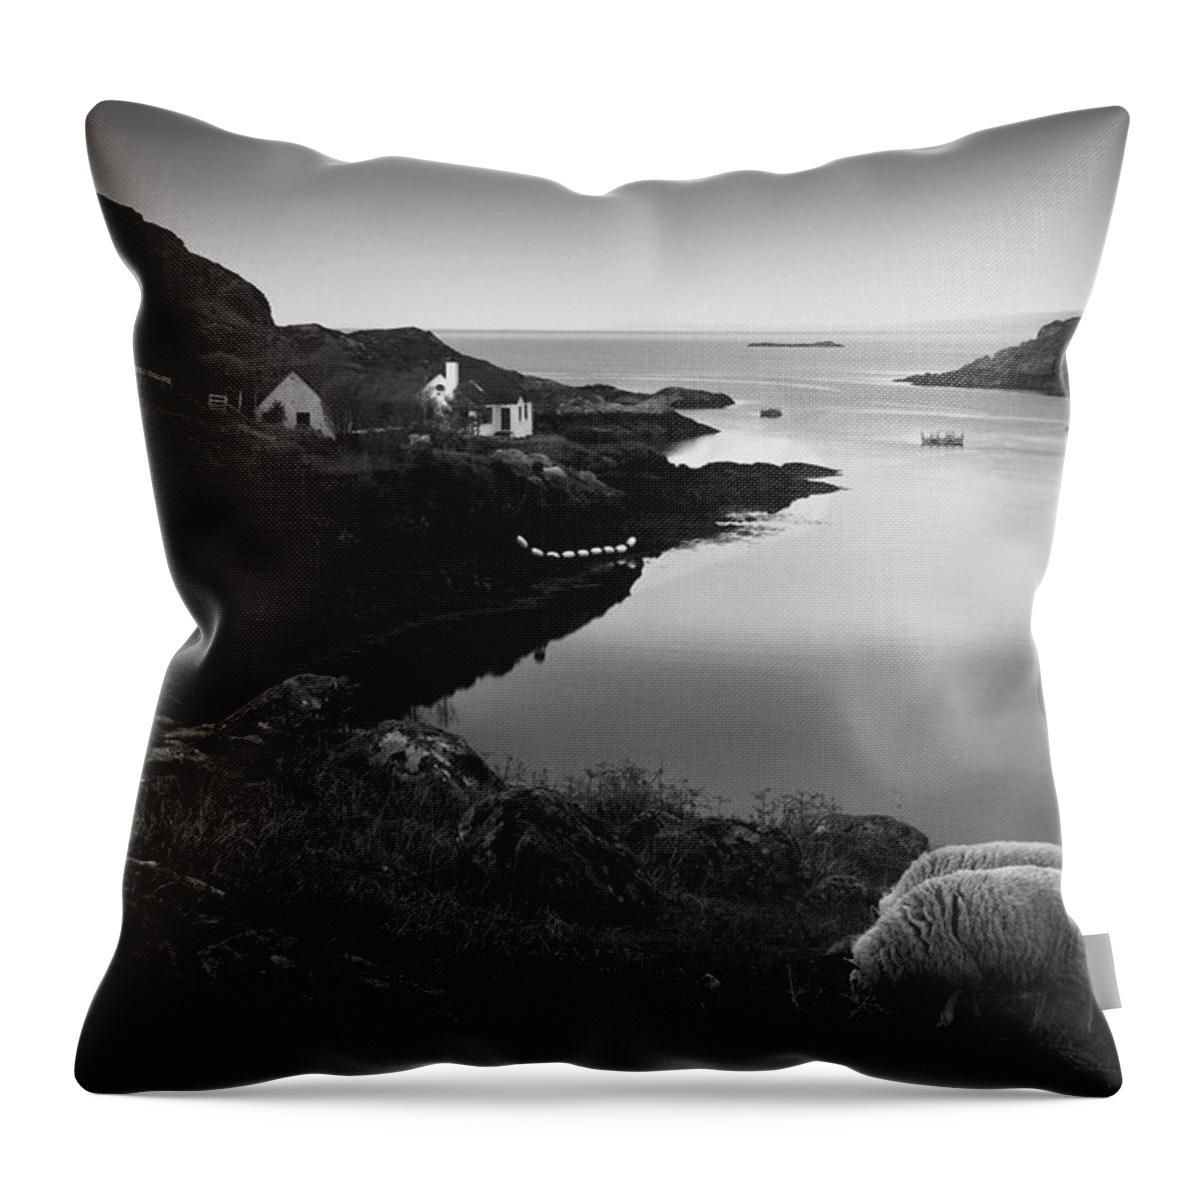 Applecross Peninsula Throw Pillow featuring the photograph The Village by Dorit Fuhg